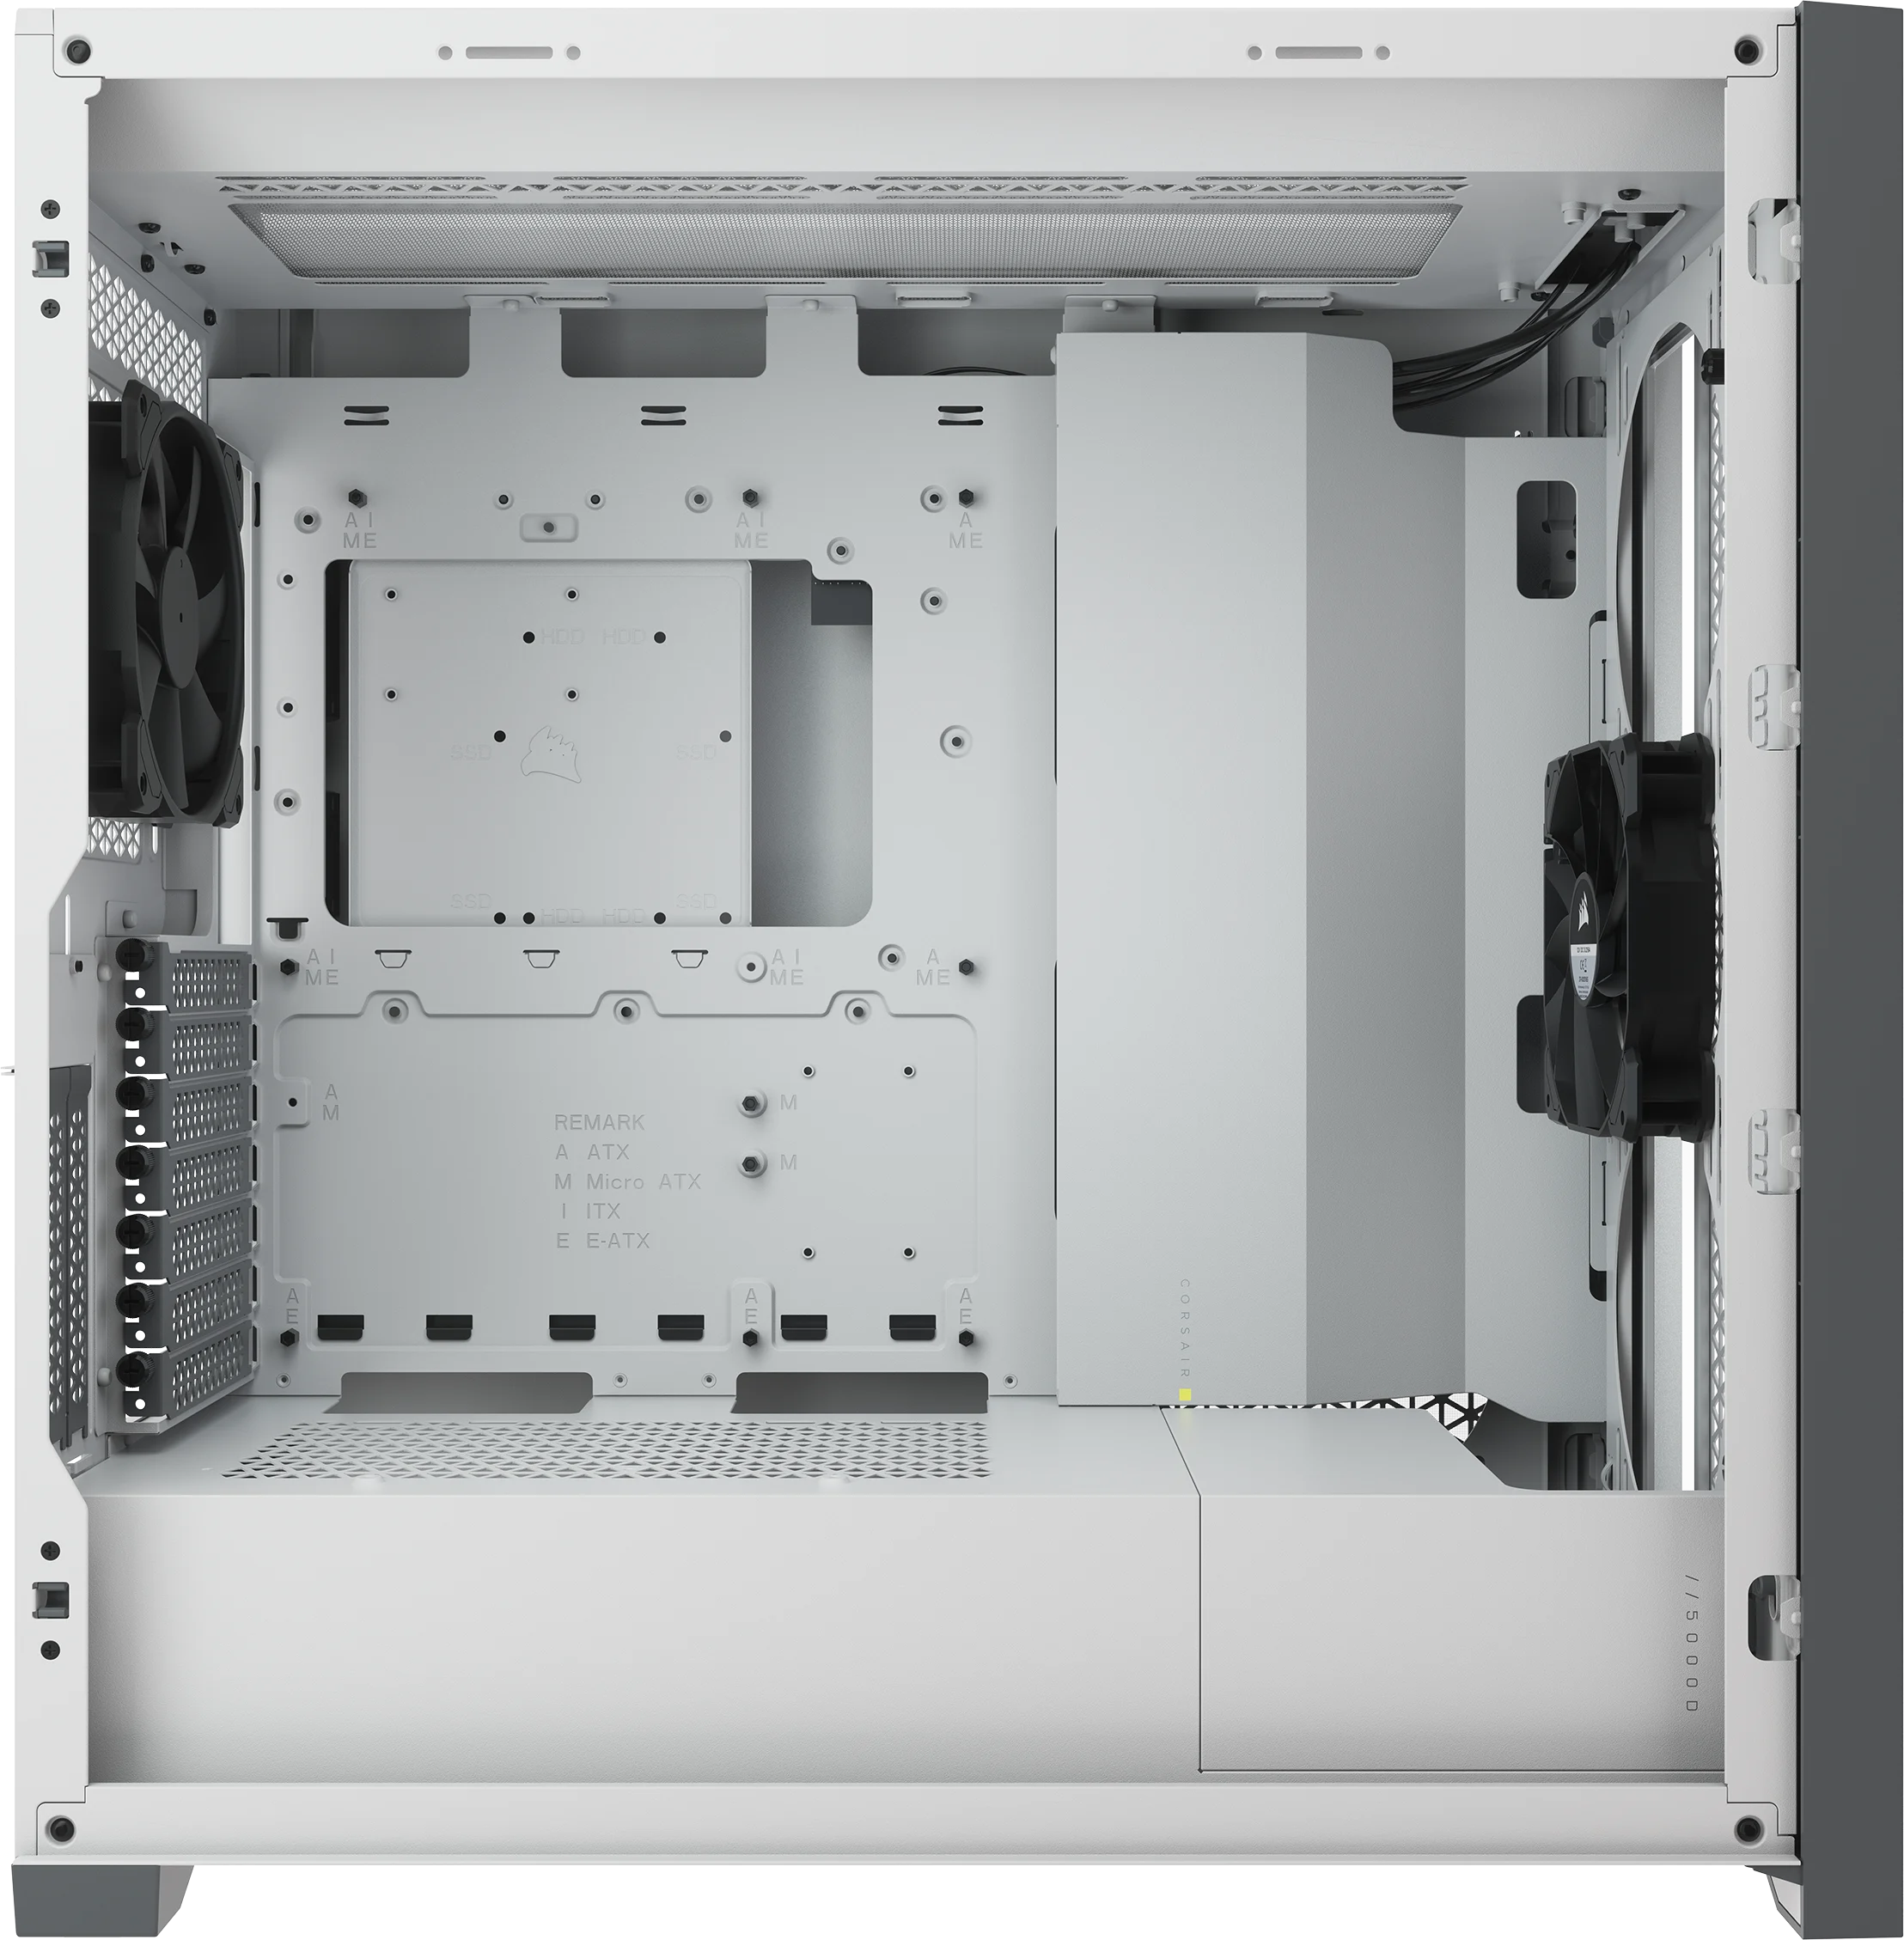 gasformig ært grad 5000D AIRFLOW Tempered Glass Mid-Tower ATX PC Case — White